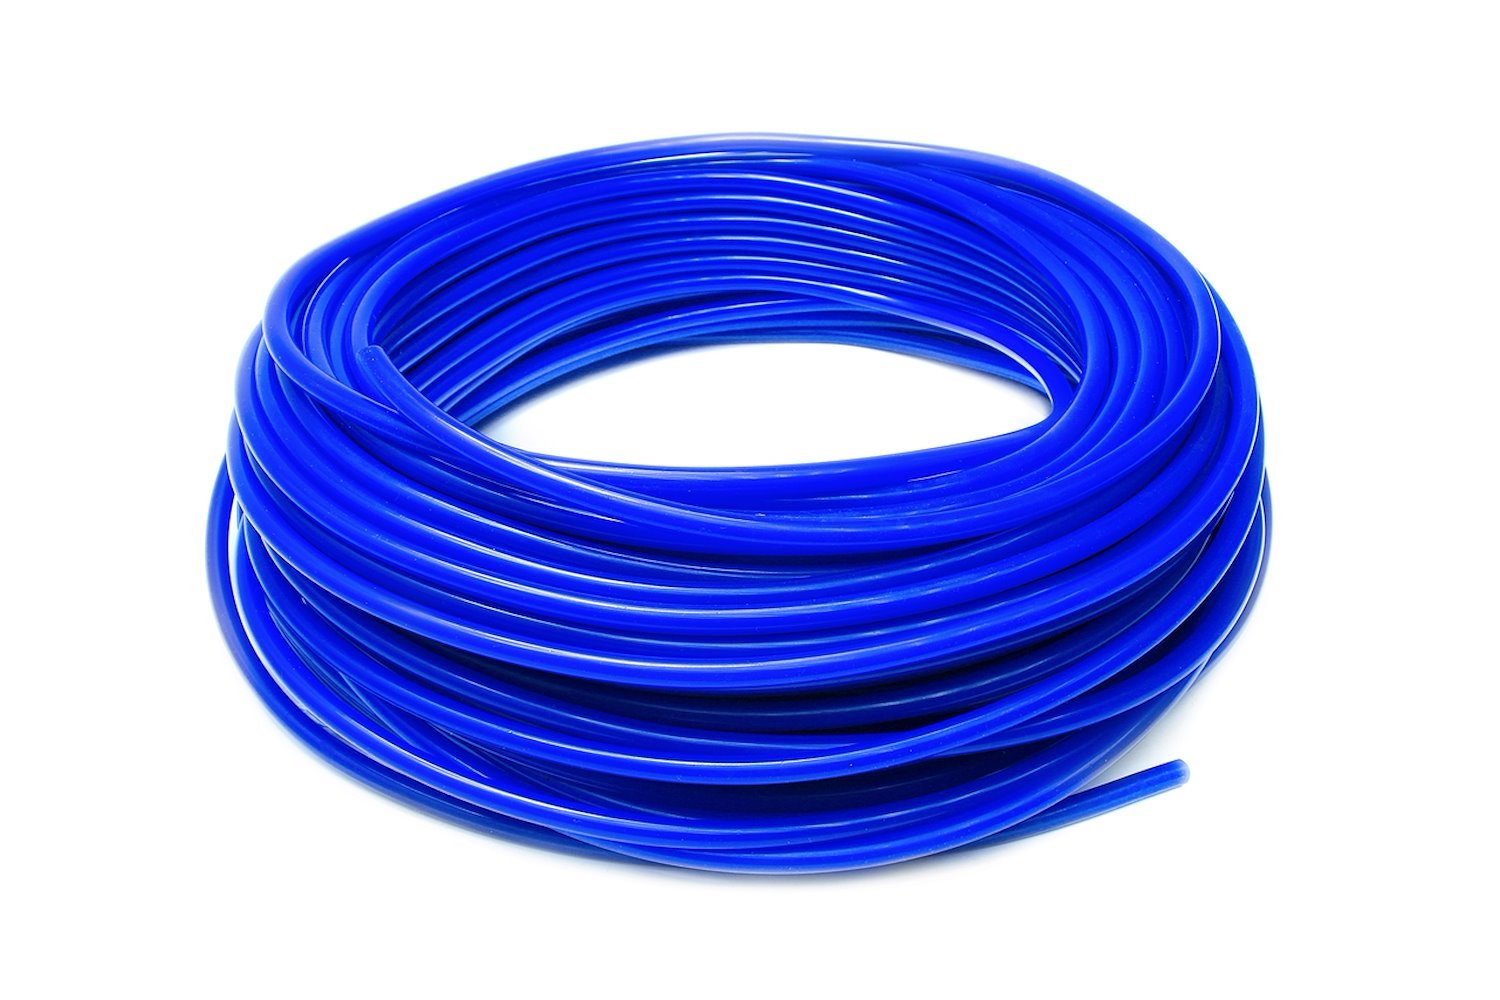 HTSVH3-BLUEx50 High-Temperature Silicone Vacuum Hose Tubing, 1/8 in. ID, 50 ft. Roll, Blue